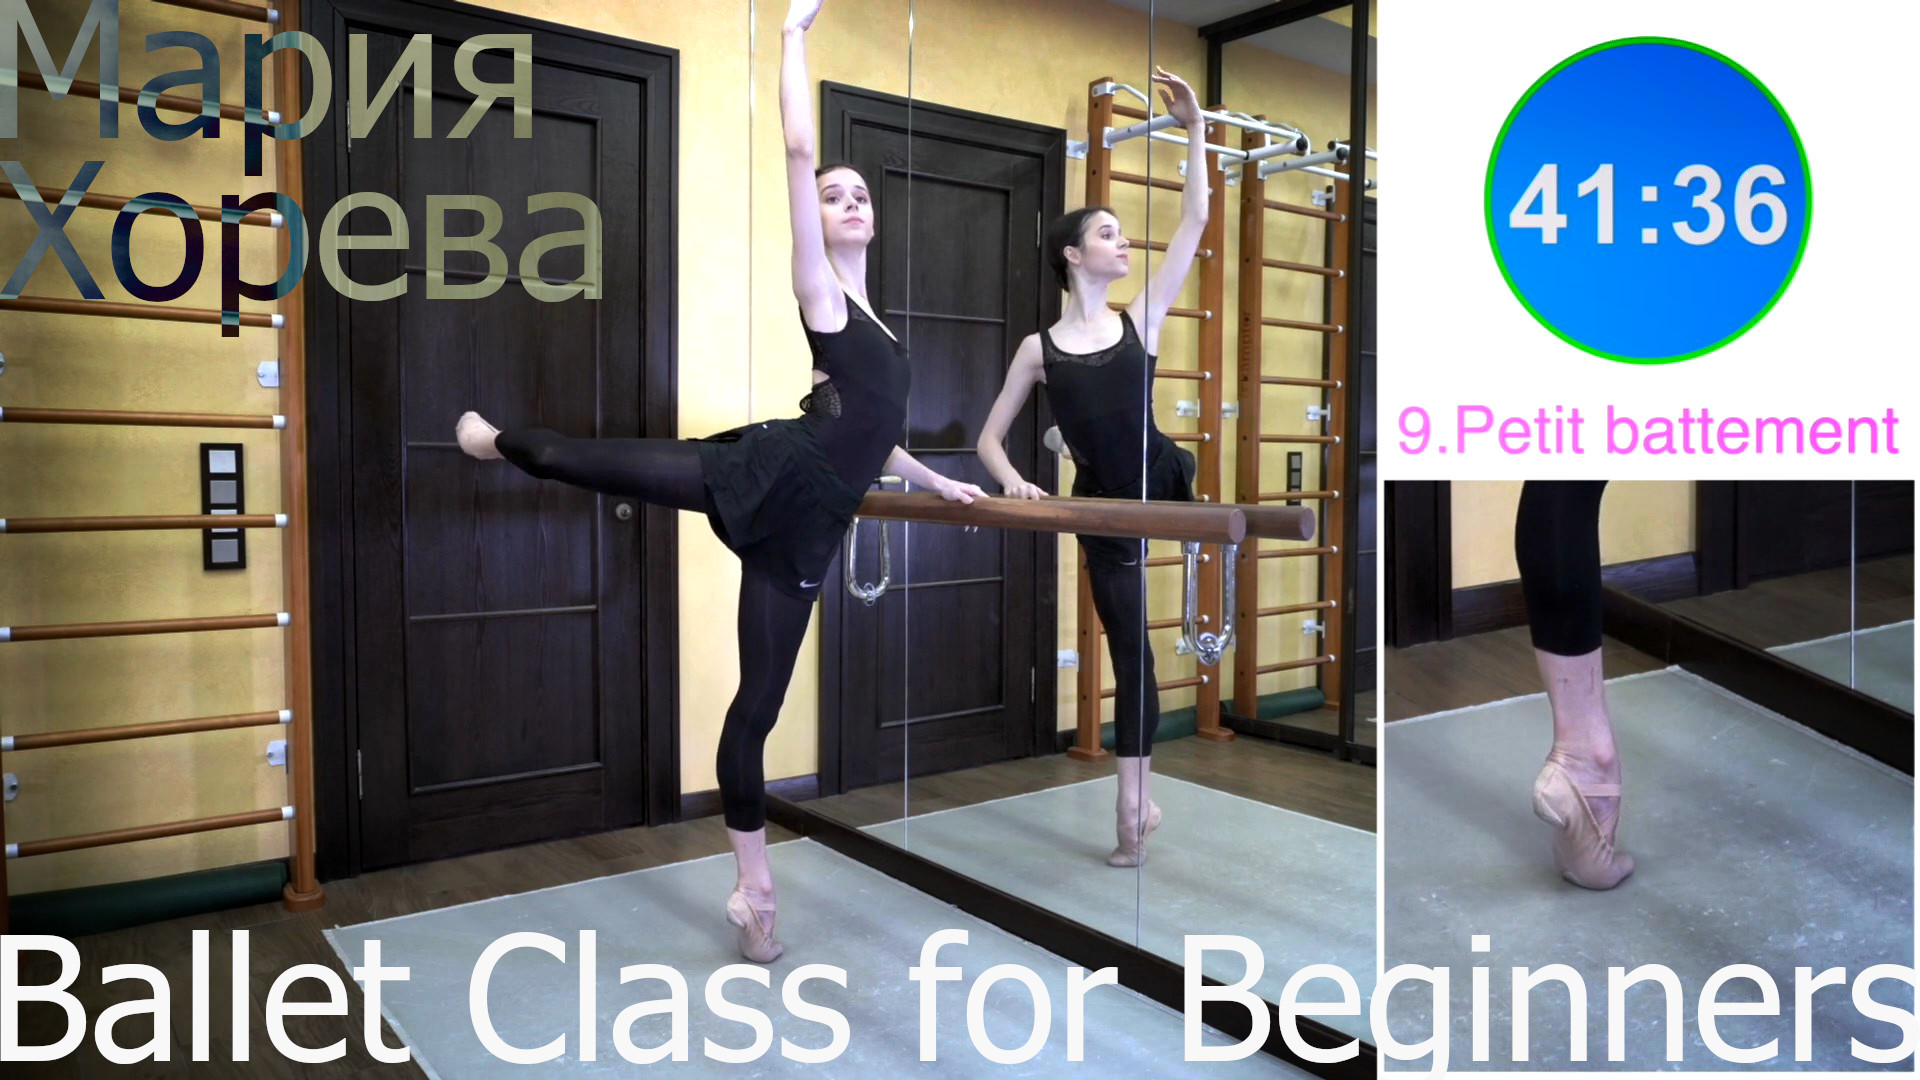 Maria Khoreva - Ballet Barre Class for Beginners